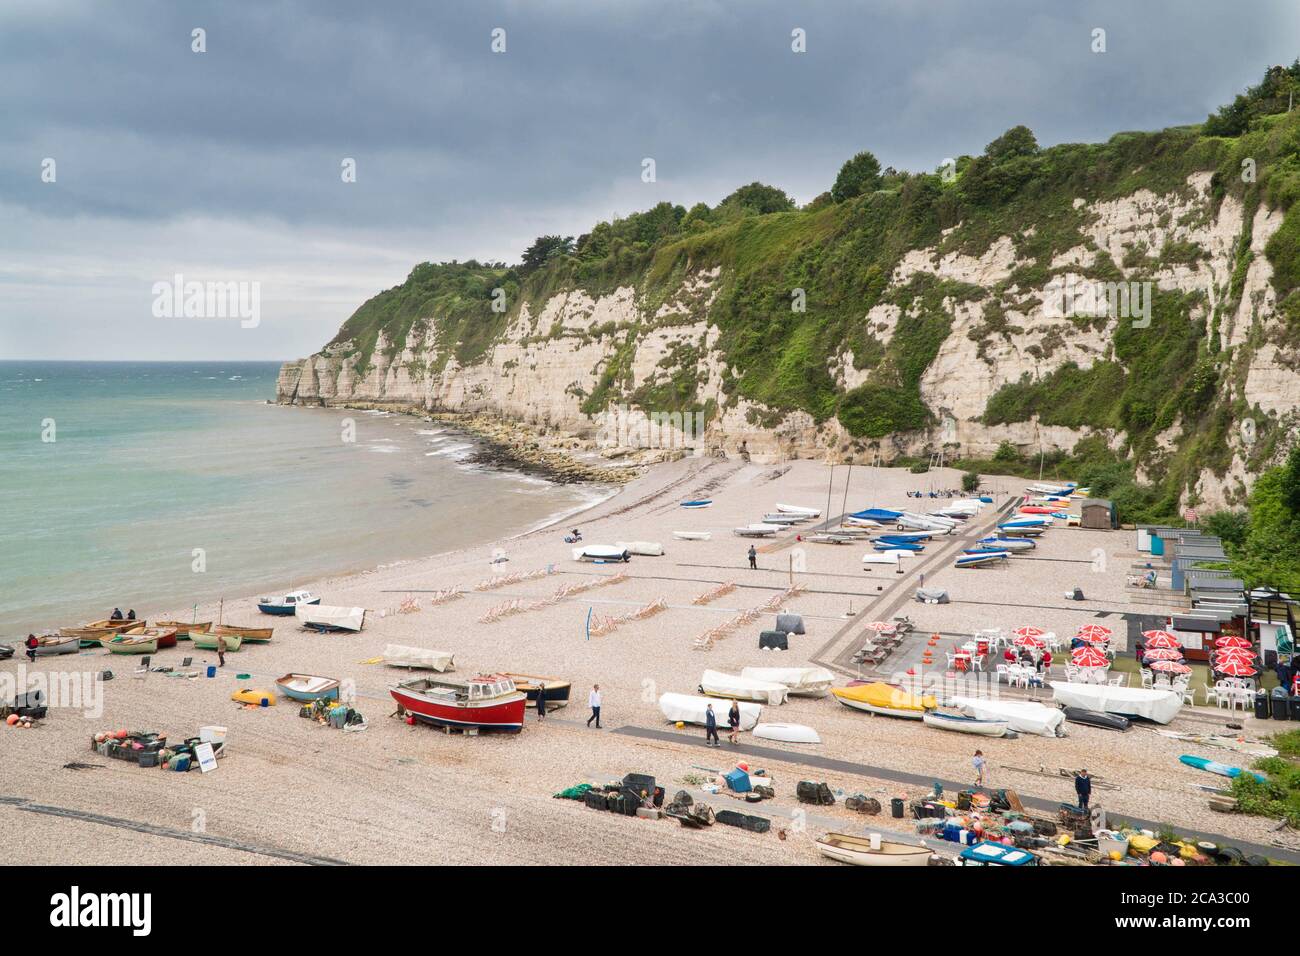 The beach Beer south Devon UK. June 2019. Stock Photo